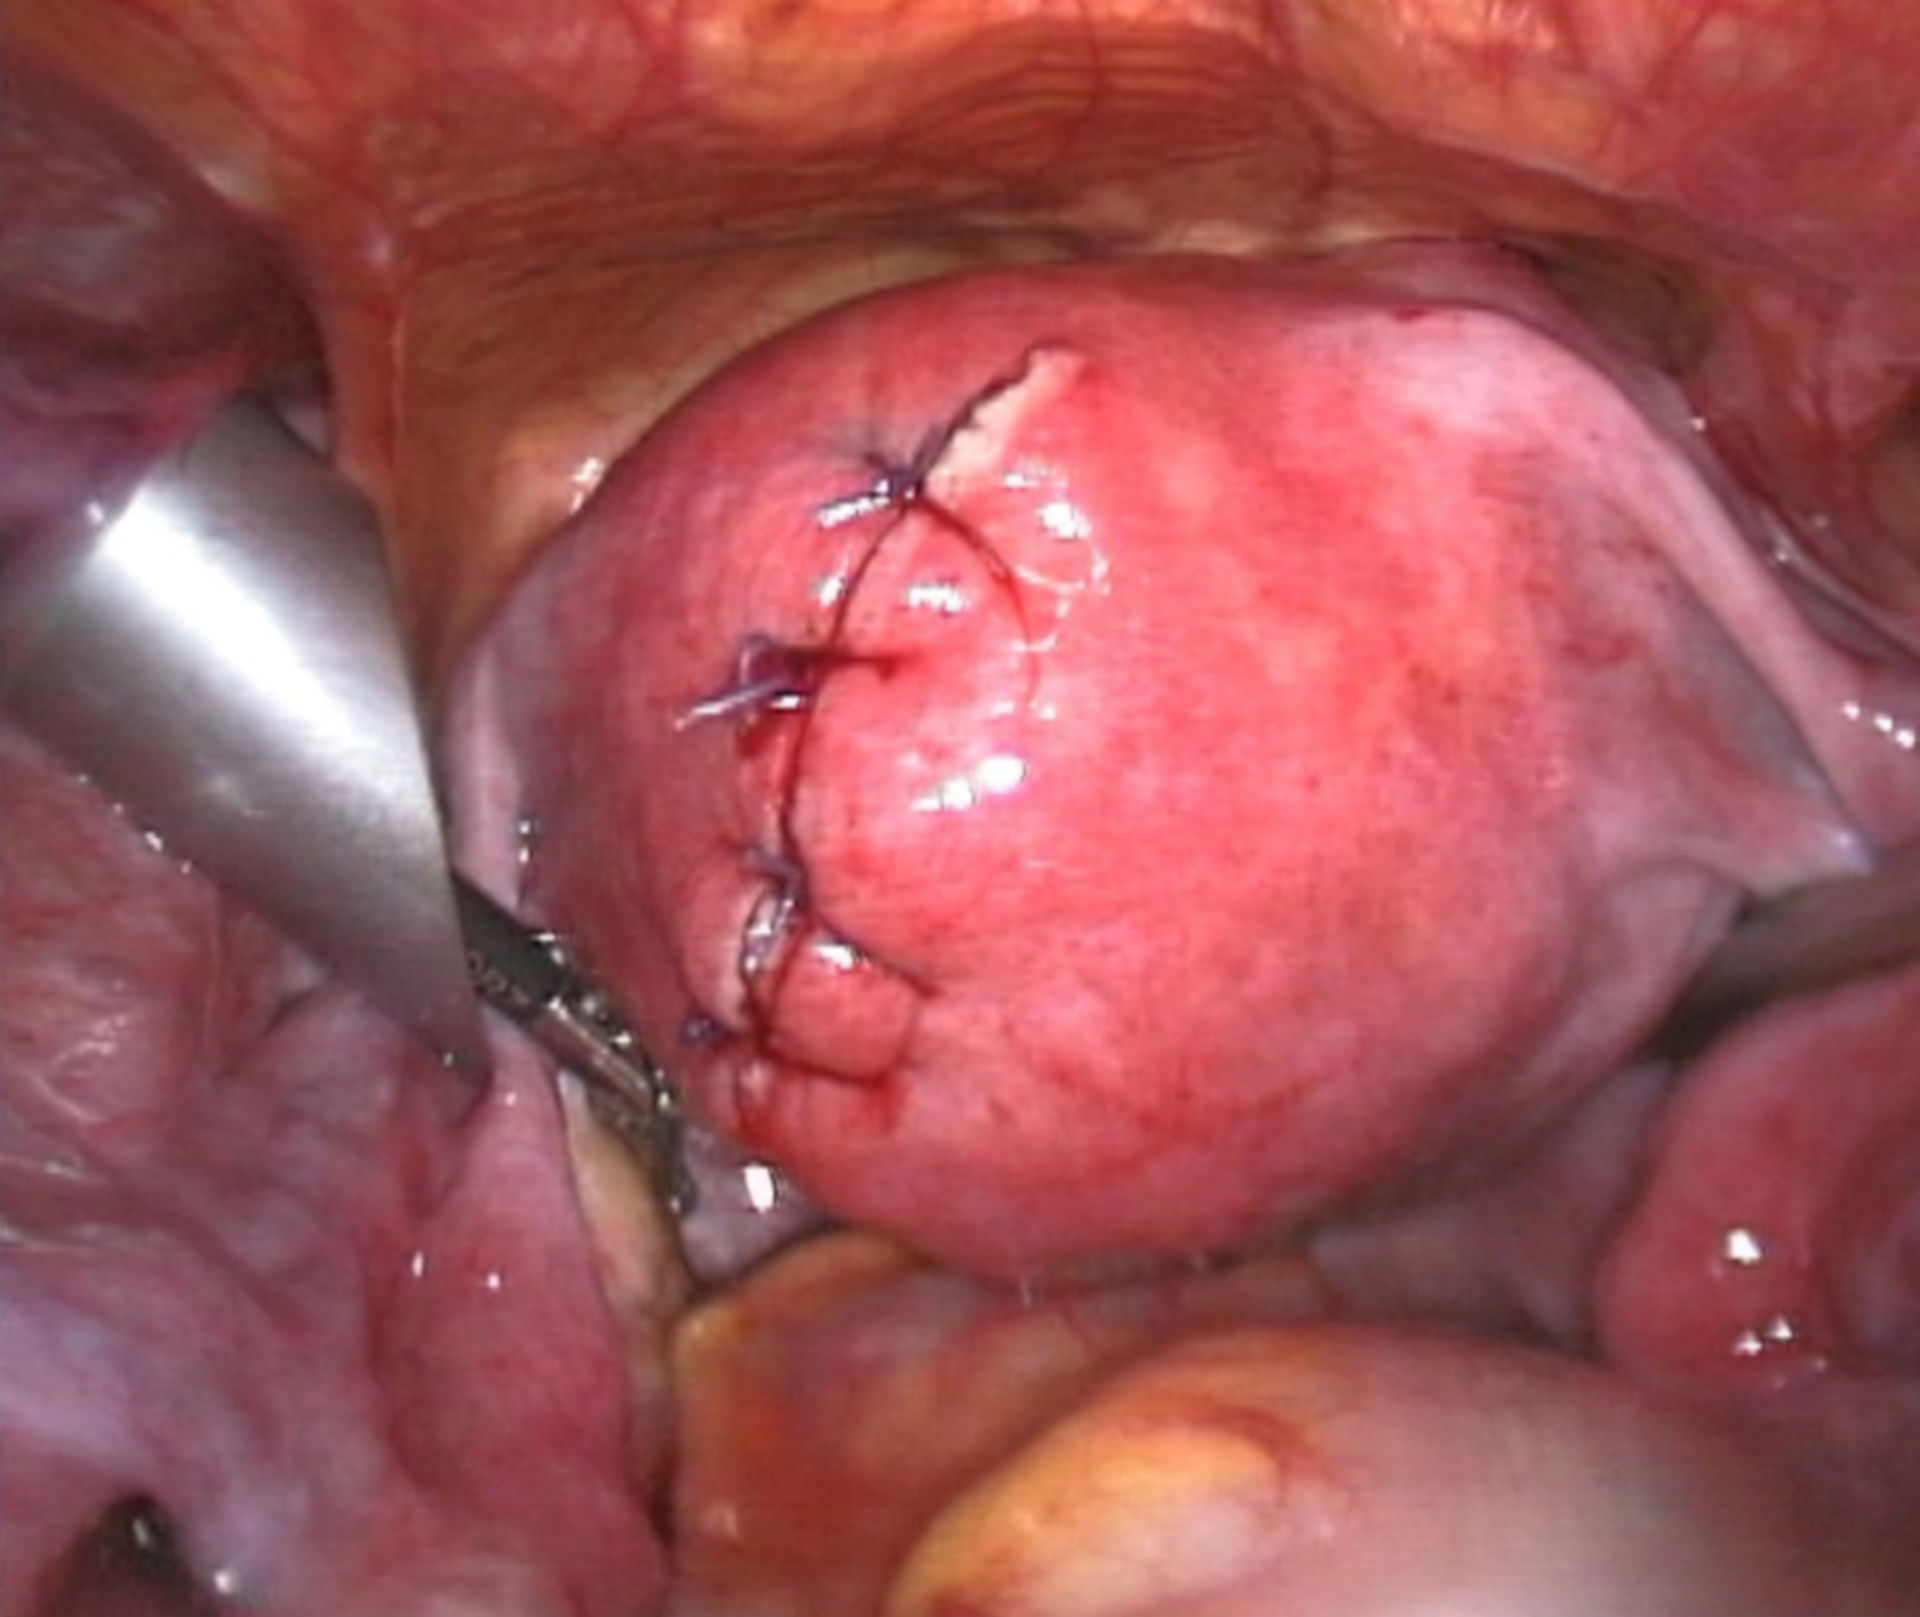 Sutured uterus wound after myomectomy